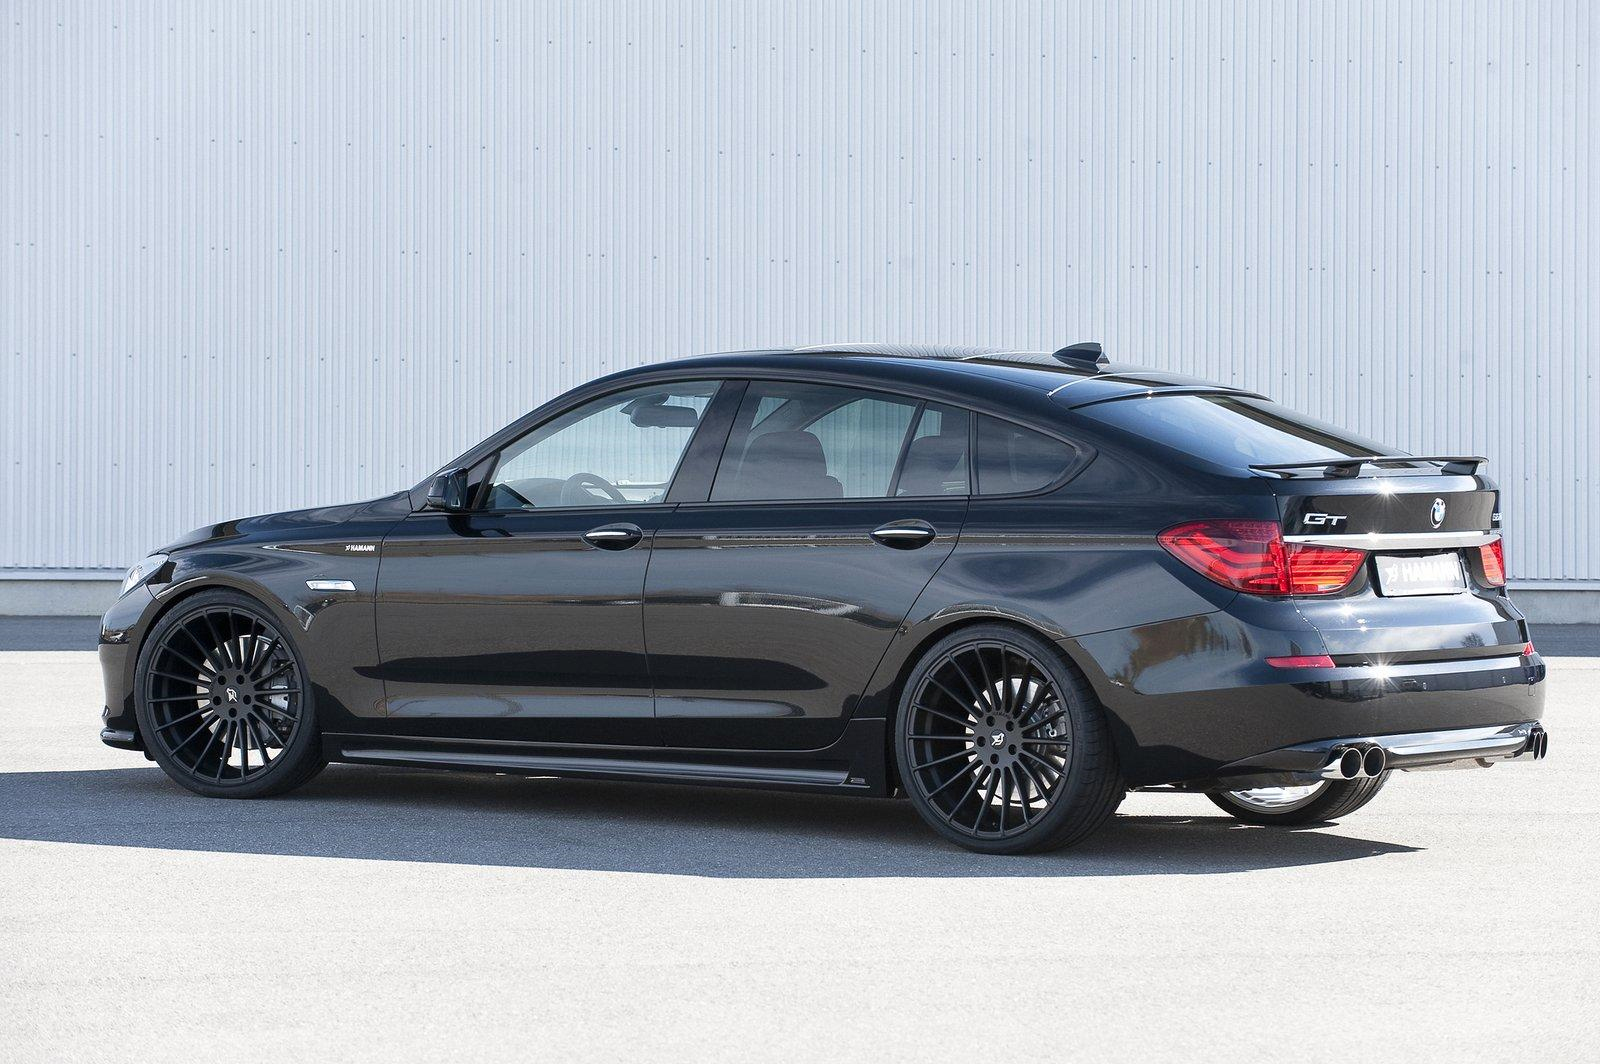 Hamann BMW 5Series GT Revealed Automotive Addicts